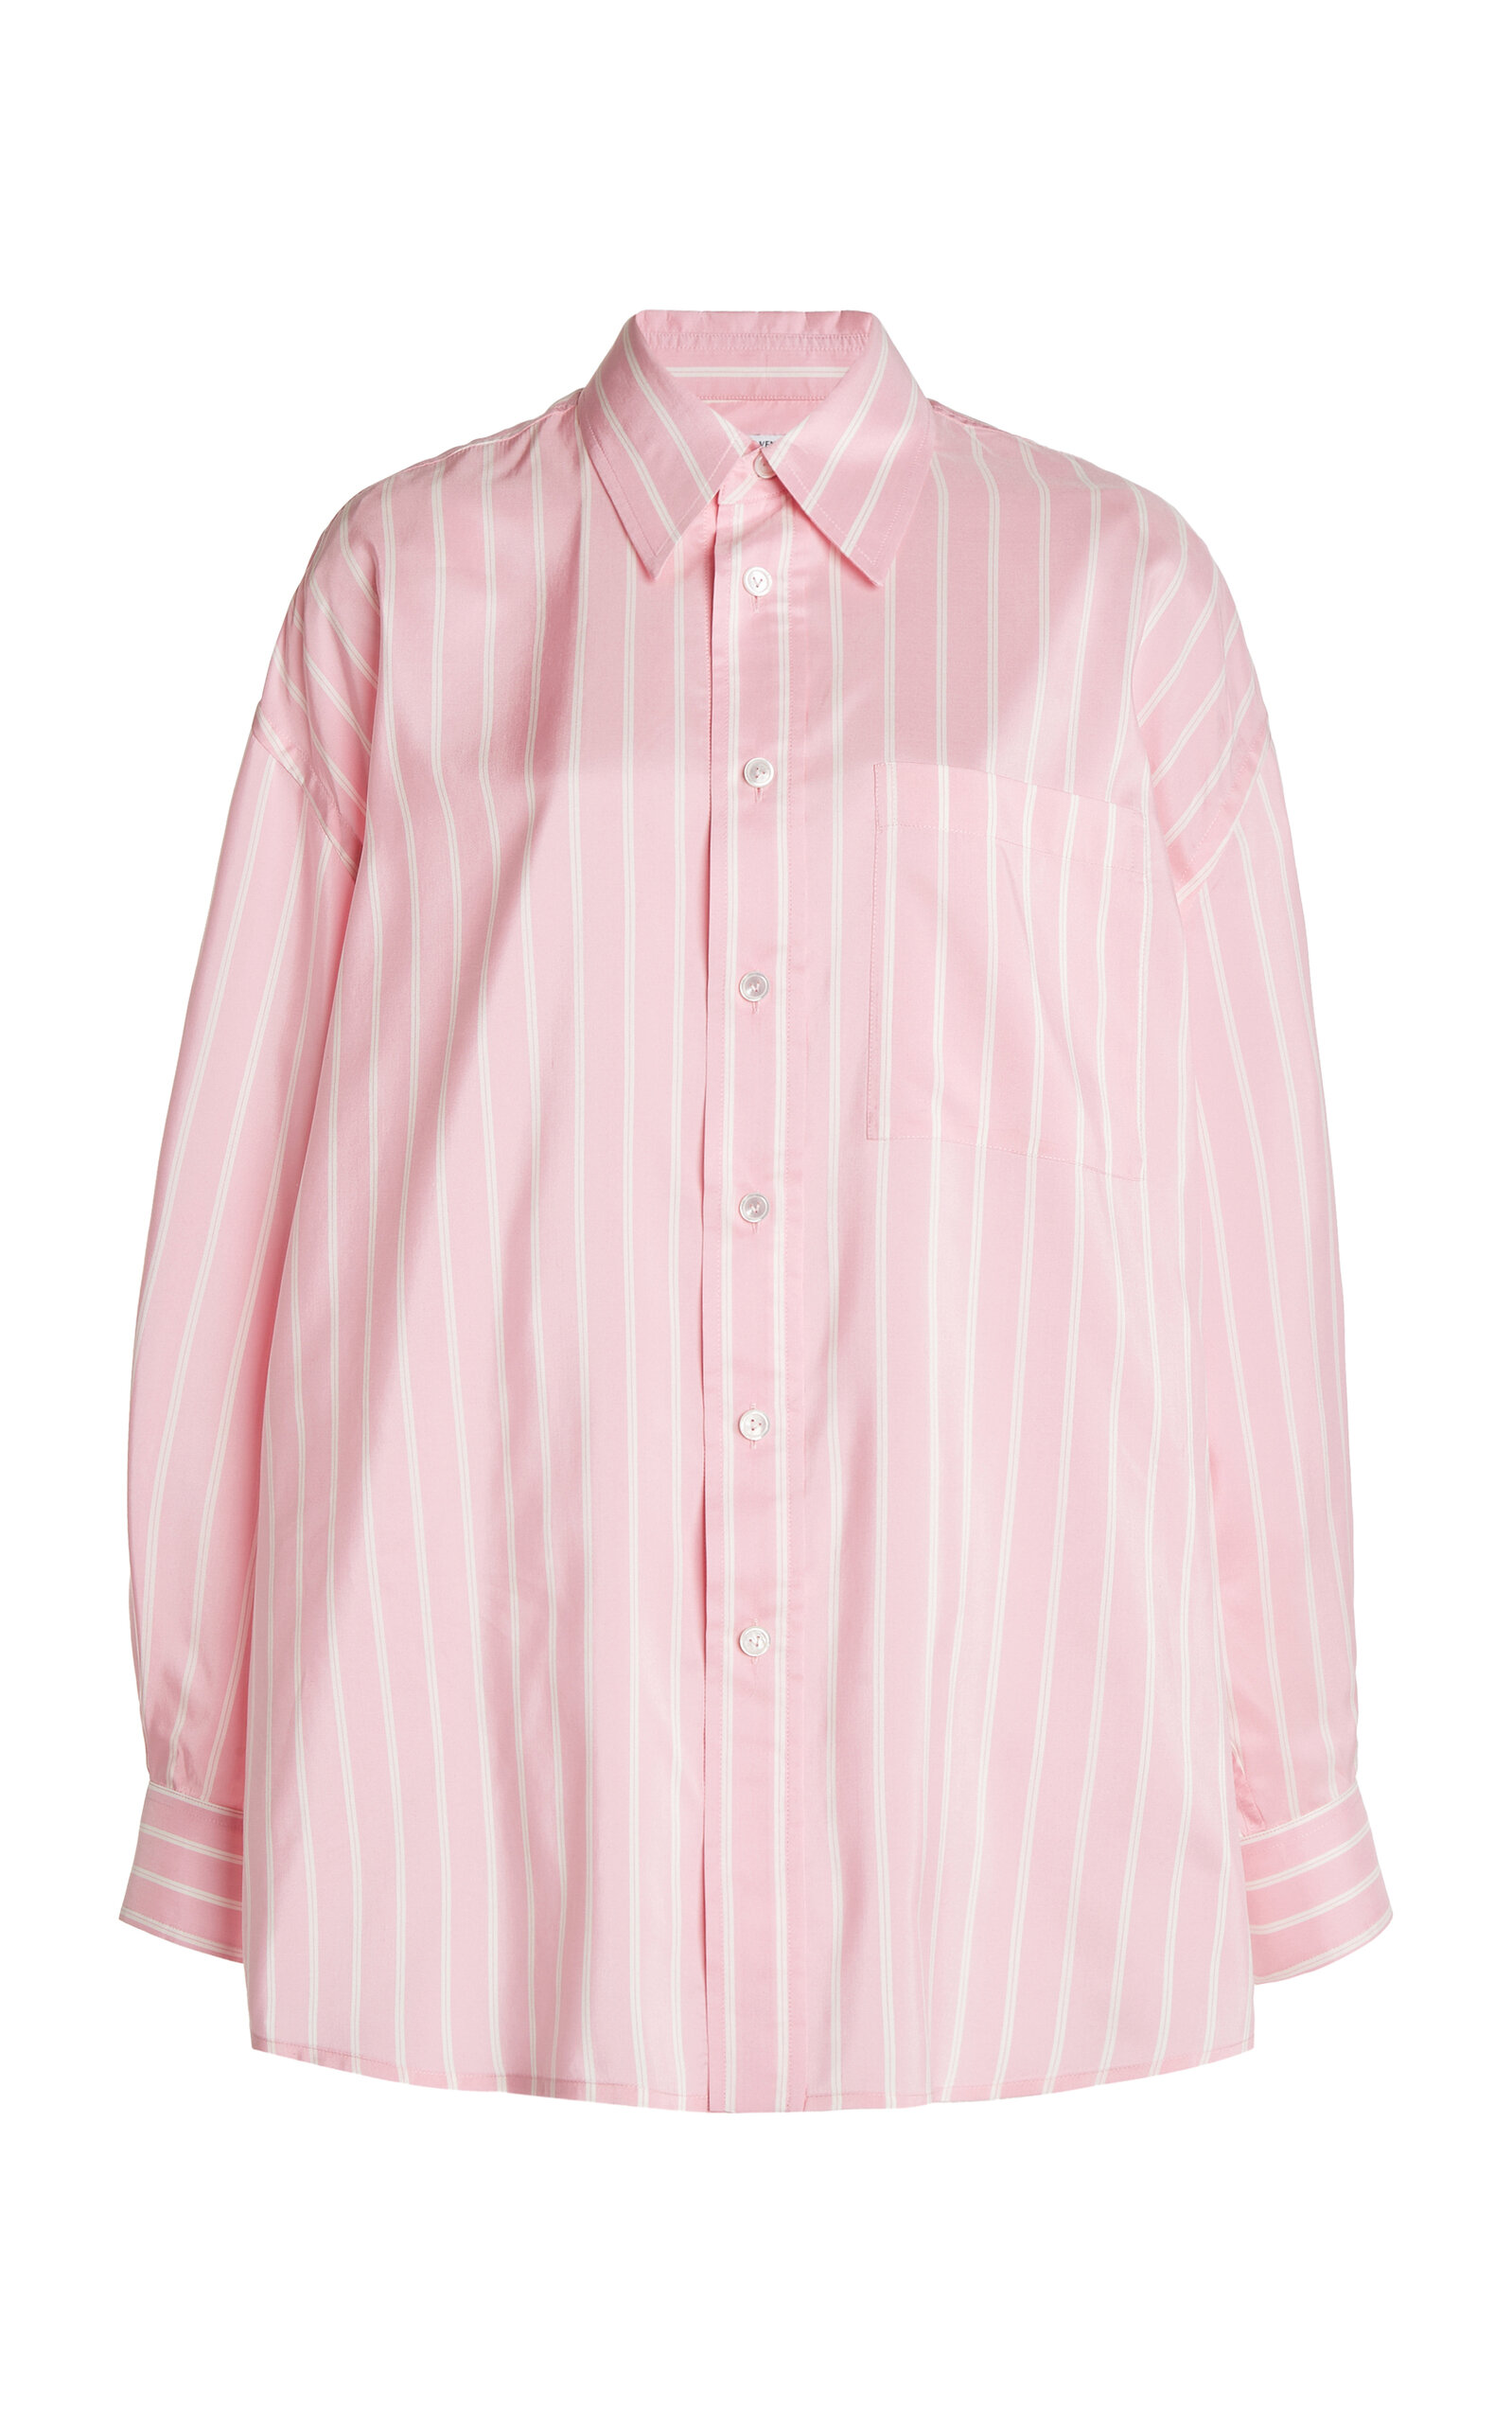 Bottega Veneta Women's Striped Silk Button-Down Shirt